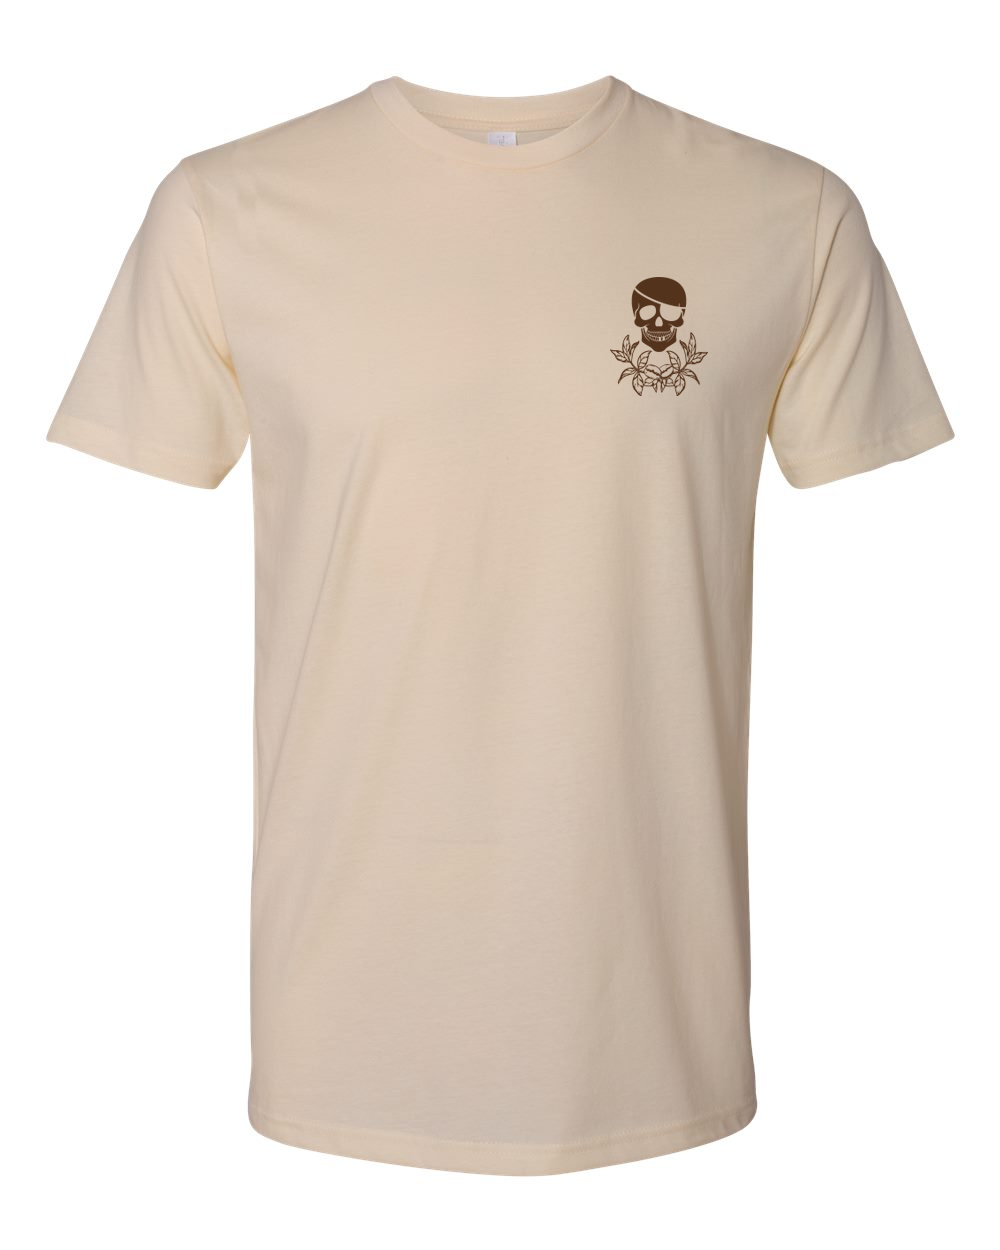 Pirates and Pearls Anniversary Logo T-Shirt